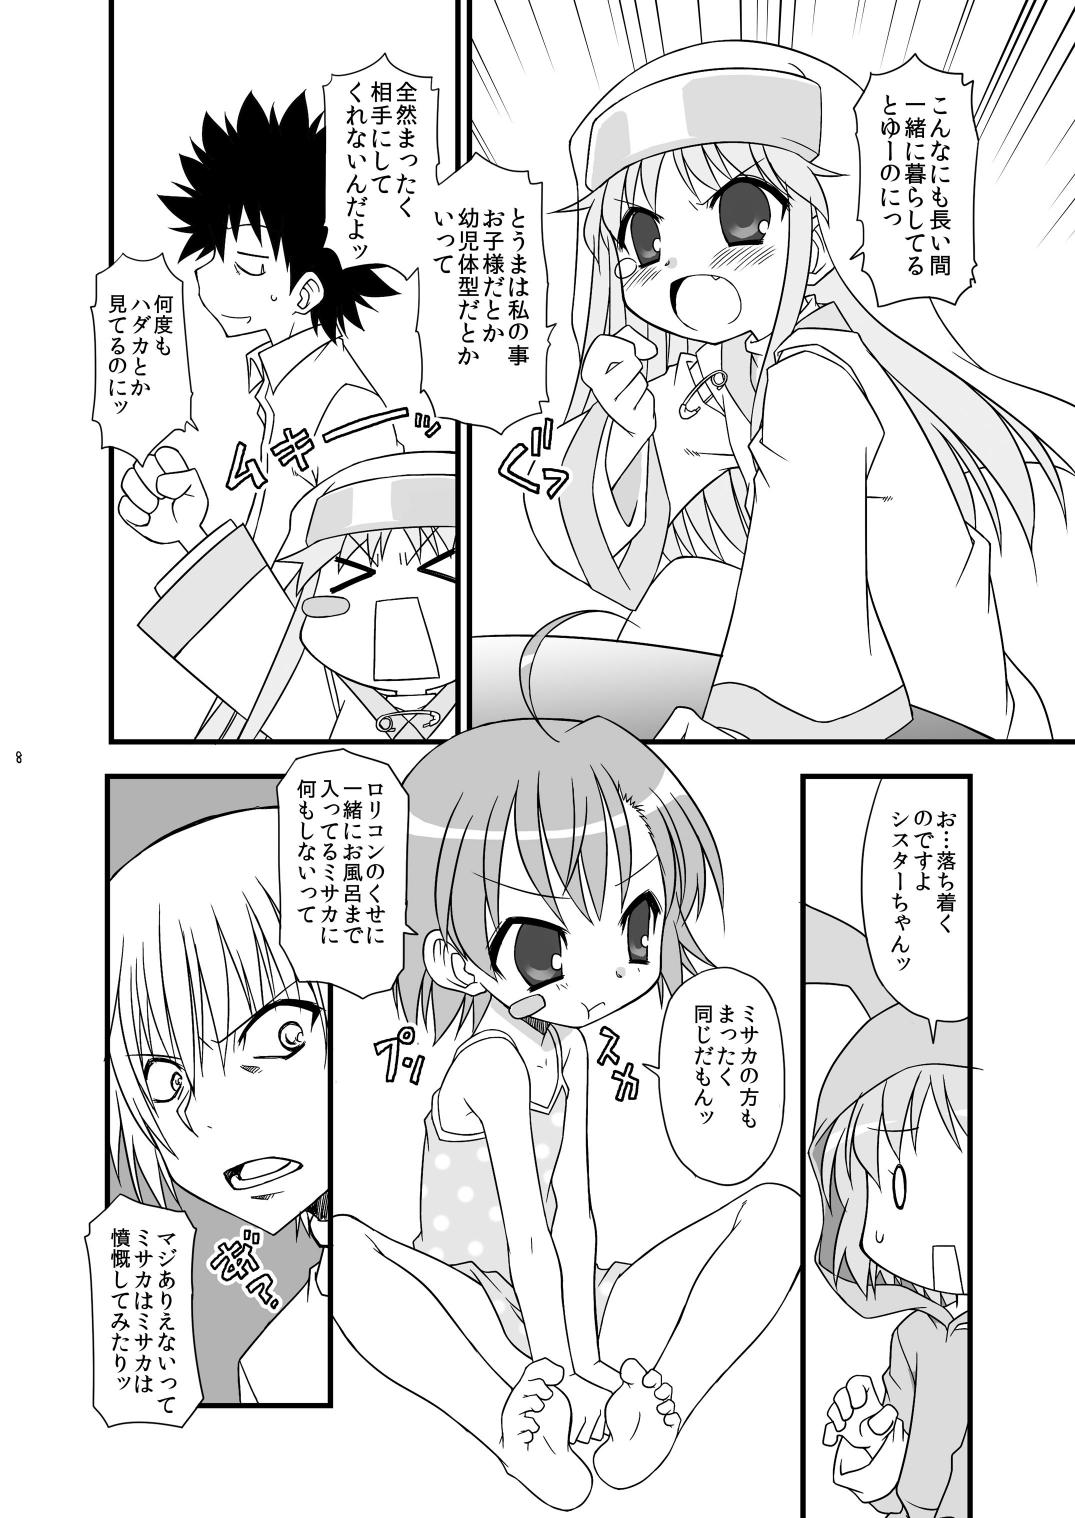 Uncut KA+SHI+MA+SHI=INDEX! - Toaru majutsu no index Kinky - Page 9